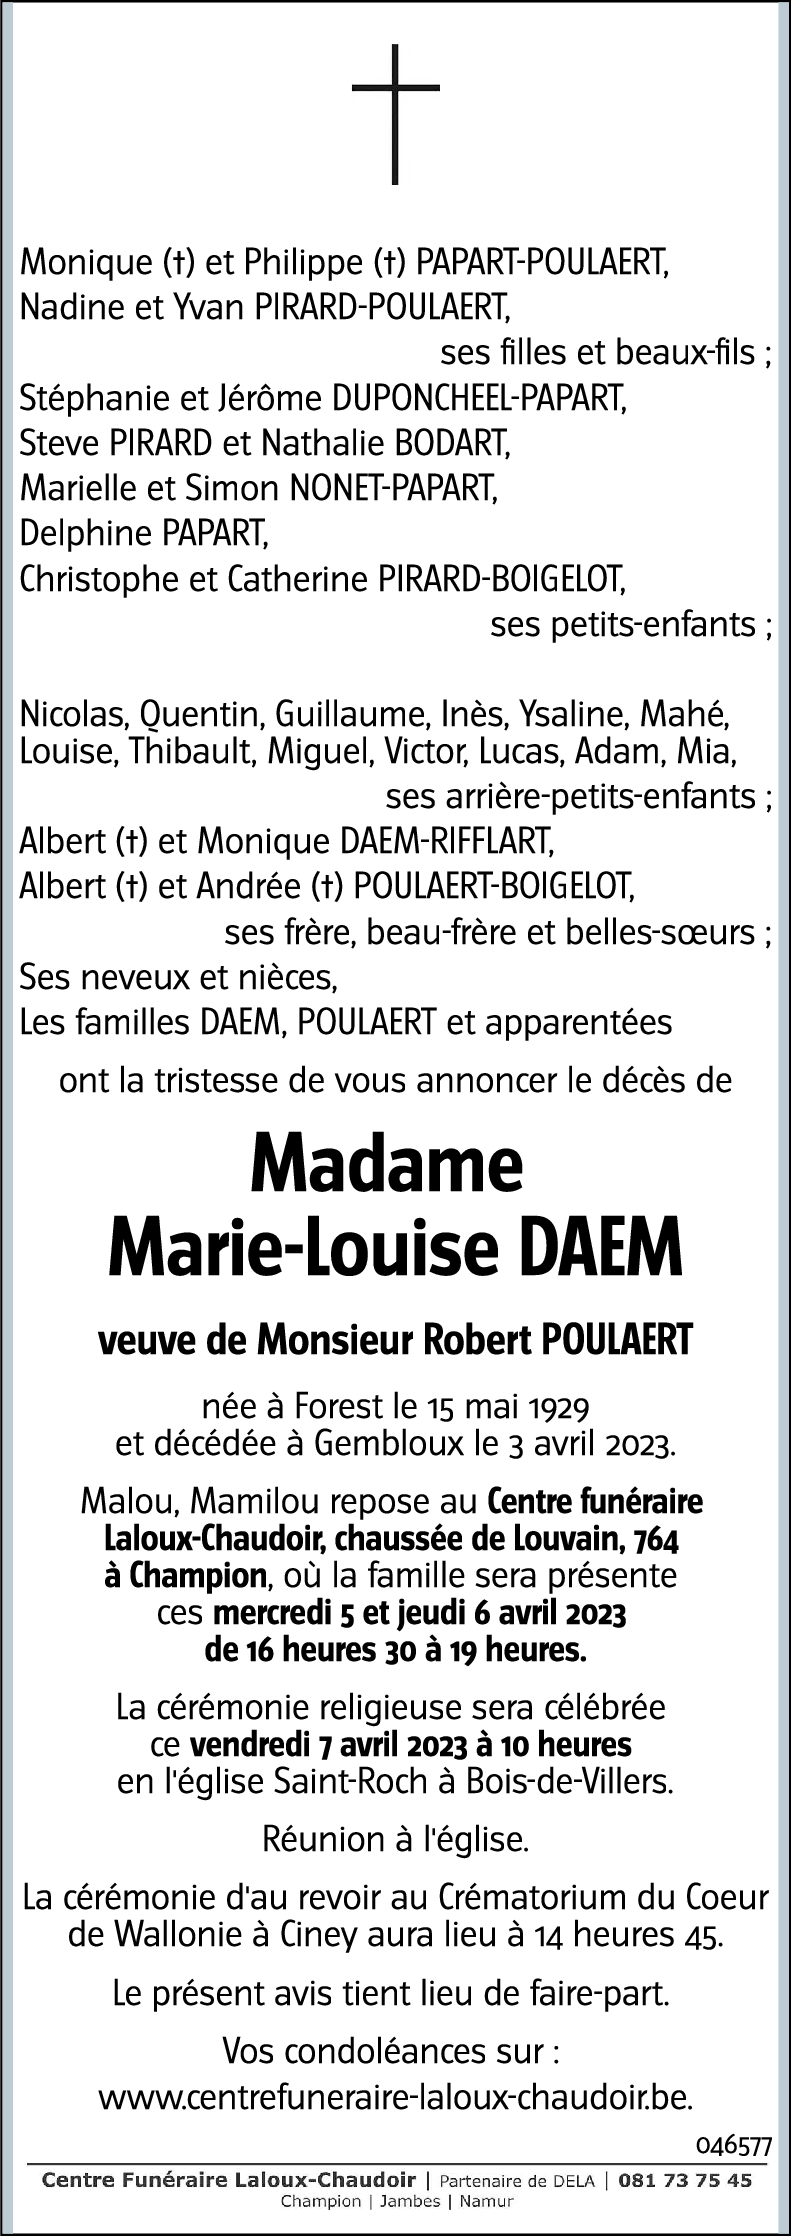 Marie-Louise DAEM